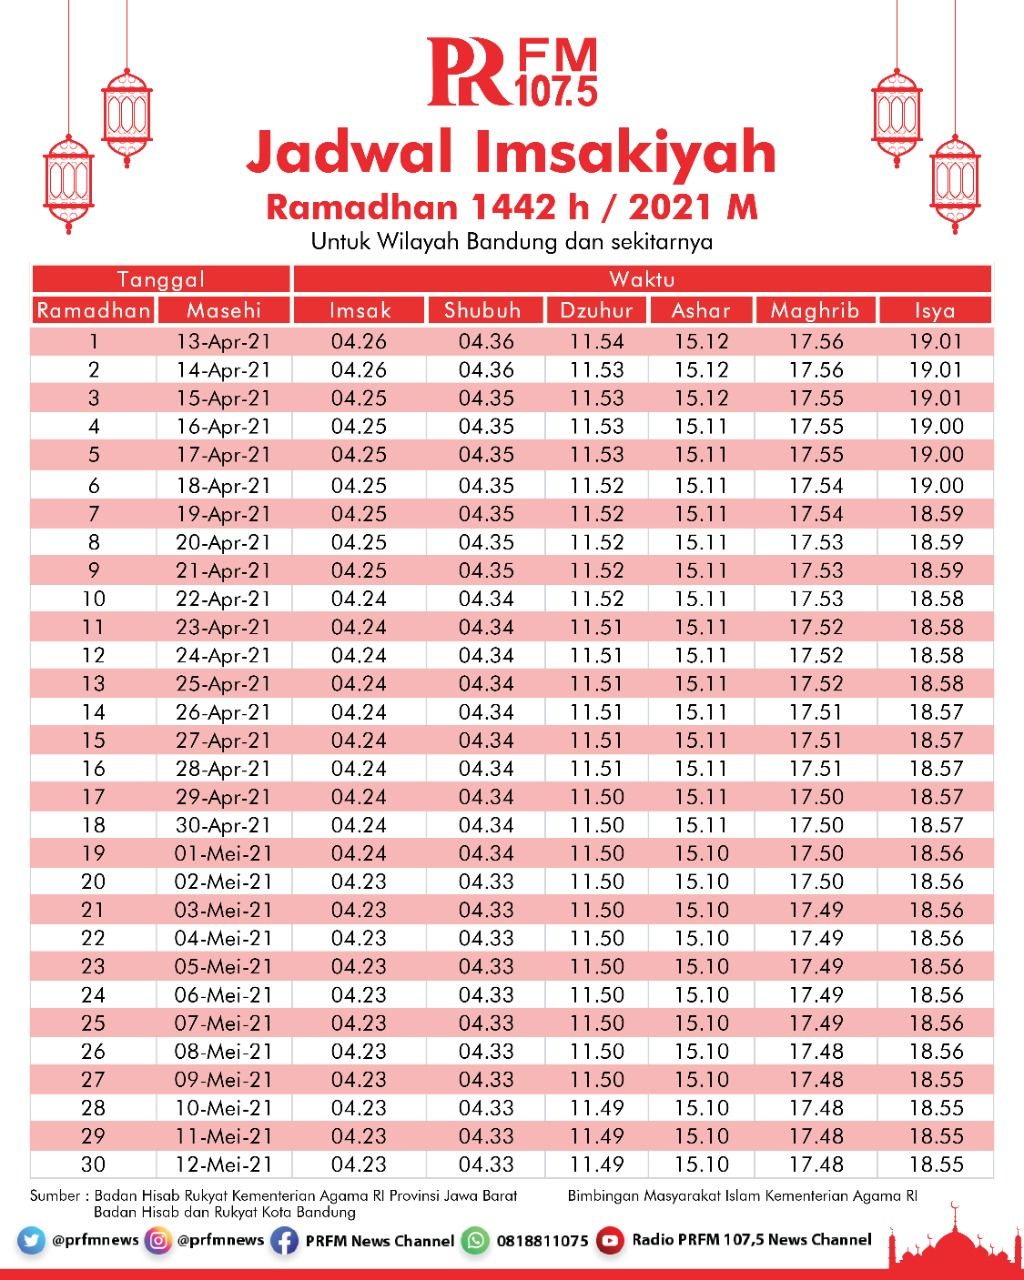 Jadwal Imsakiyah Bandung Ramadhan 2021 - Pikiran-Rakyat.com